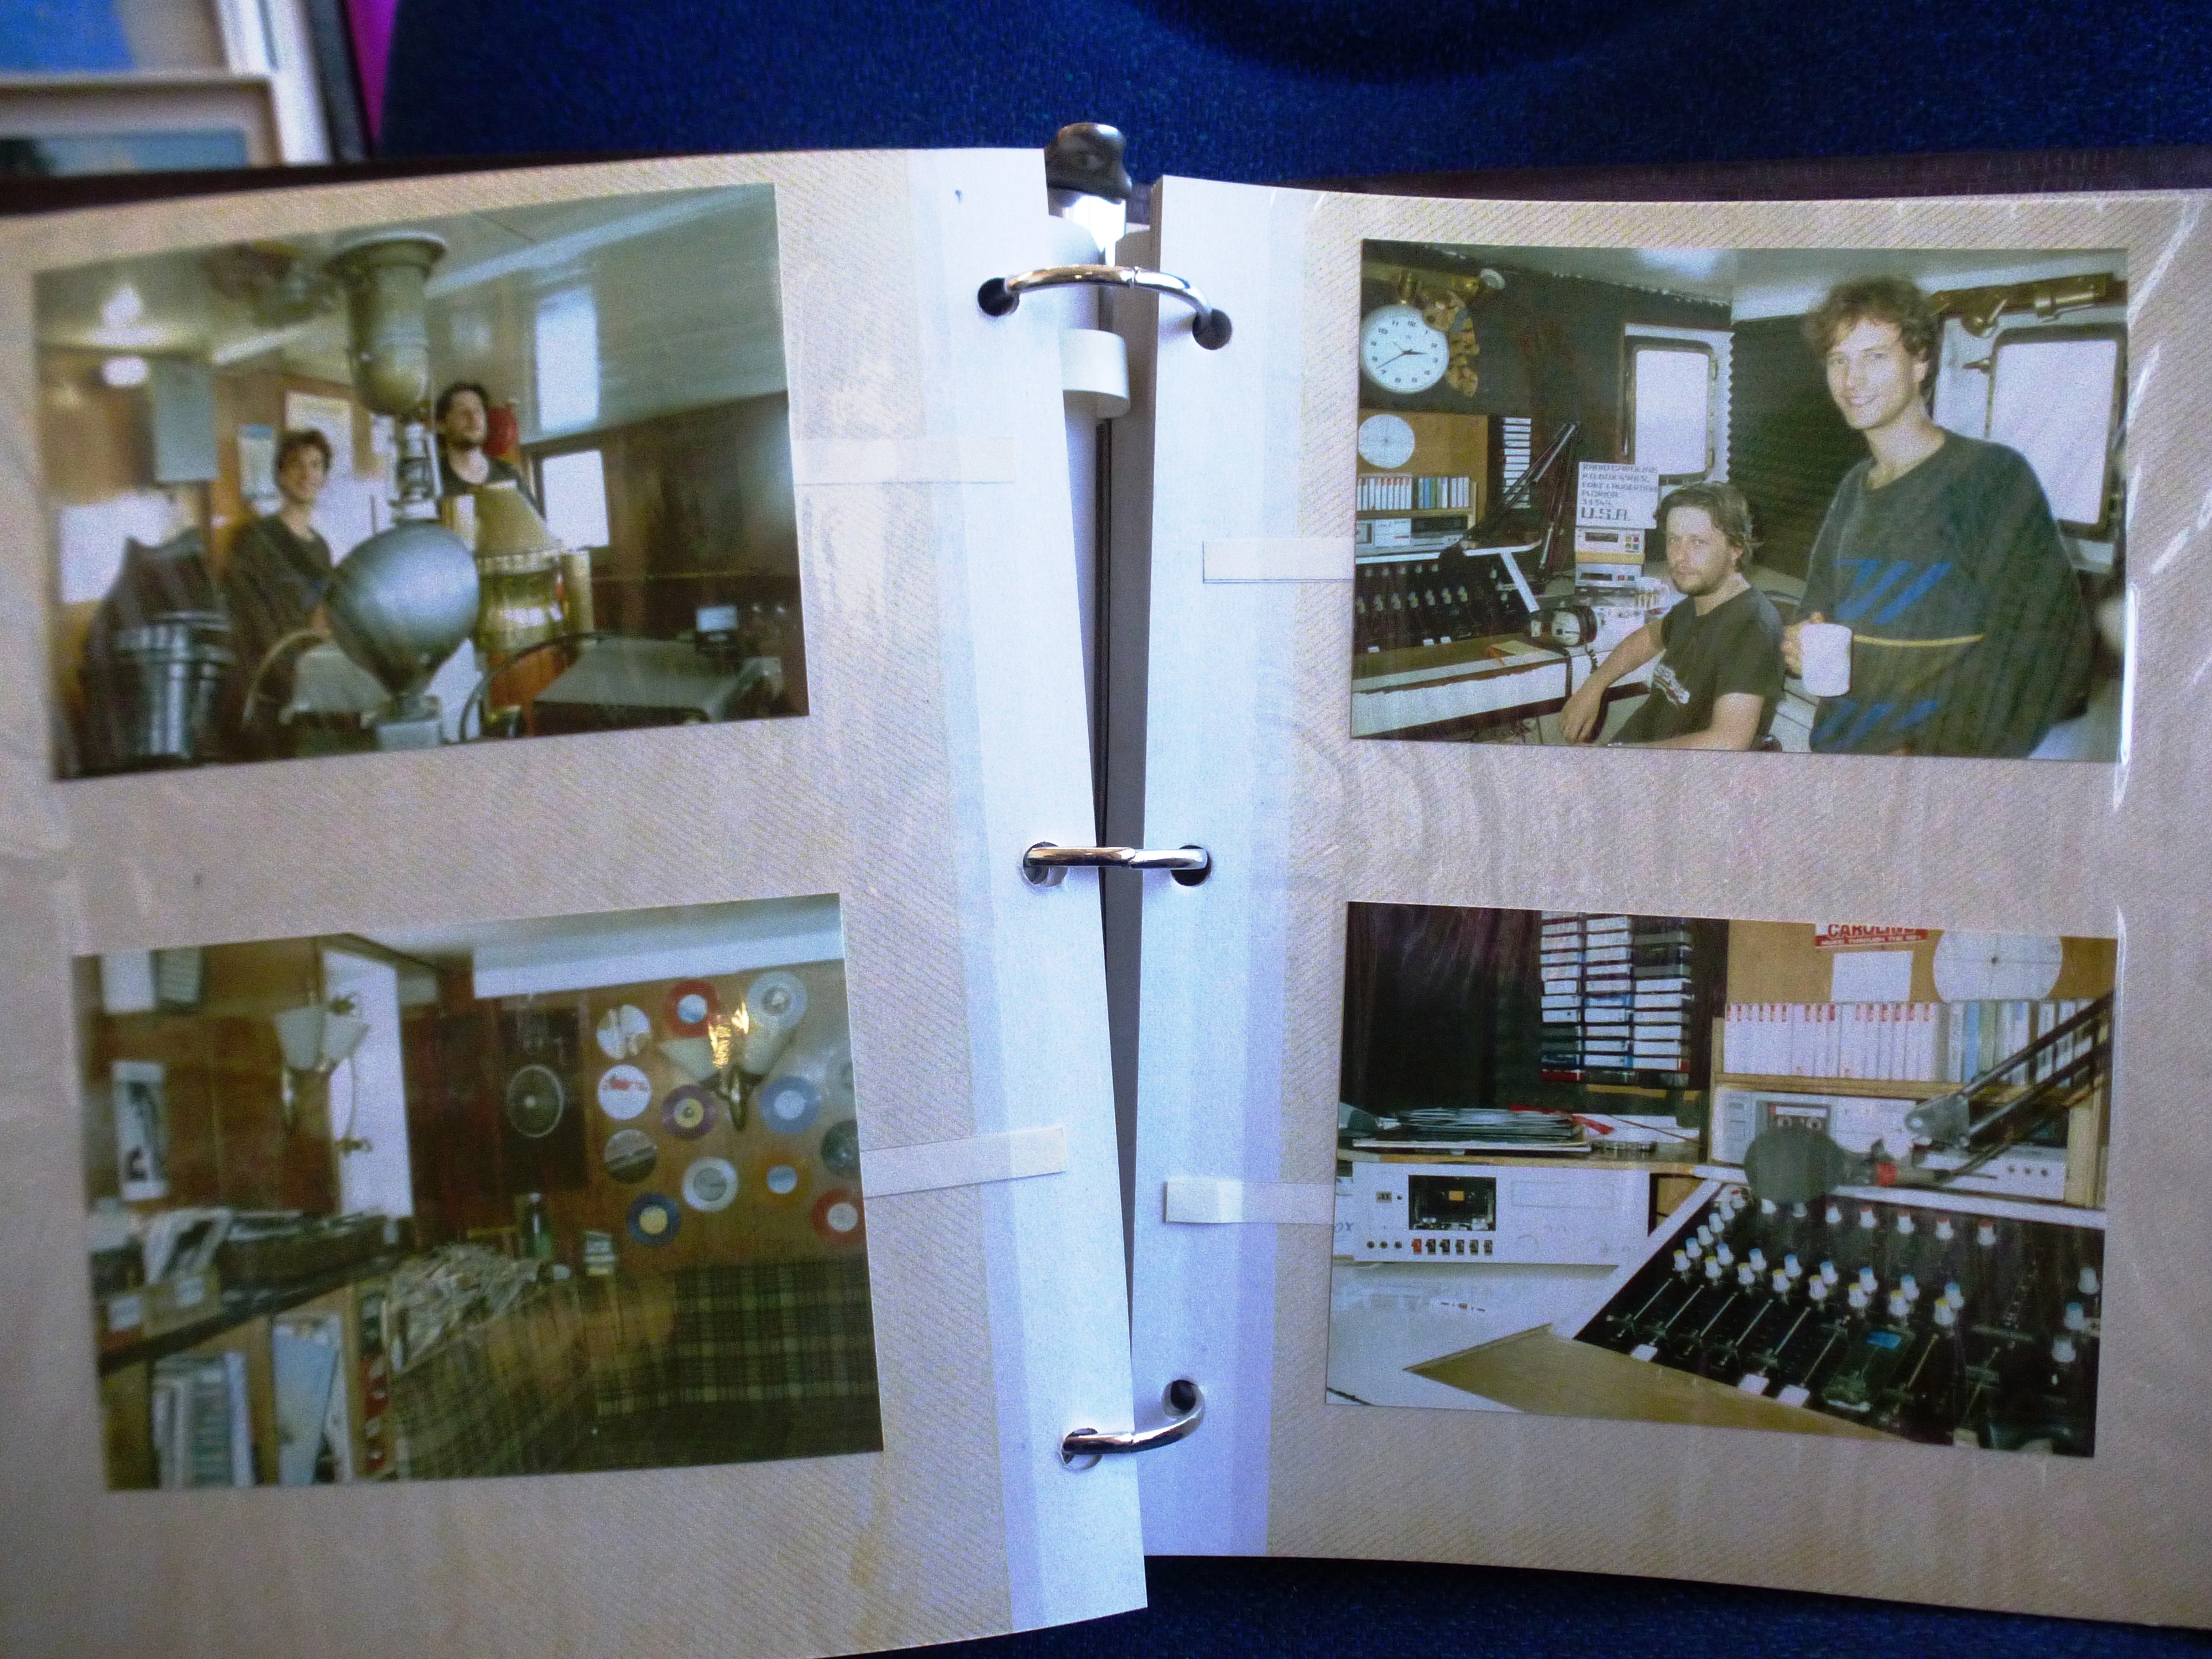 RADIO CAROLINE PHOTOGRAPH ALBUM WITH PHOTOGRAPHS OF THE SHIP, INTERIOR, DJS, EQUIPMENT, MAINTENANCE, - Image 22 of 28